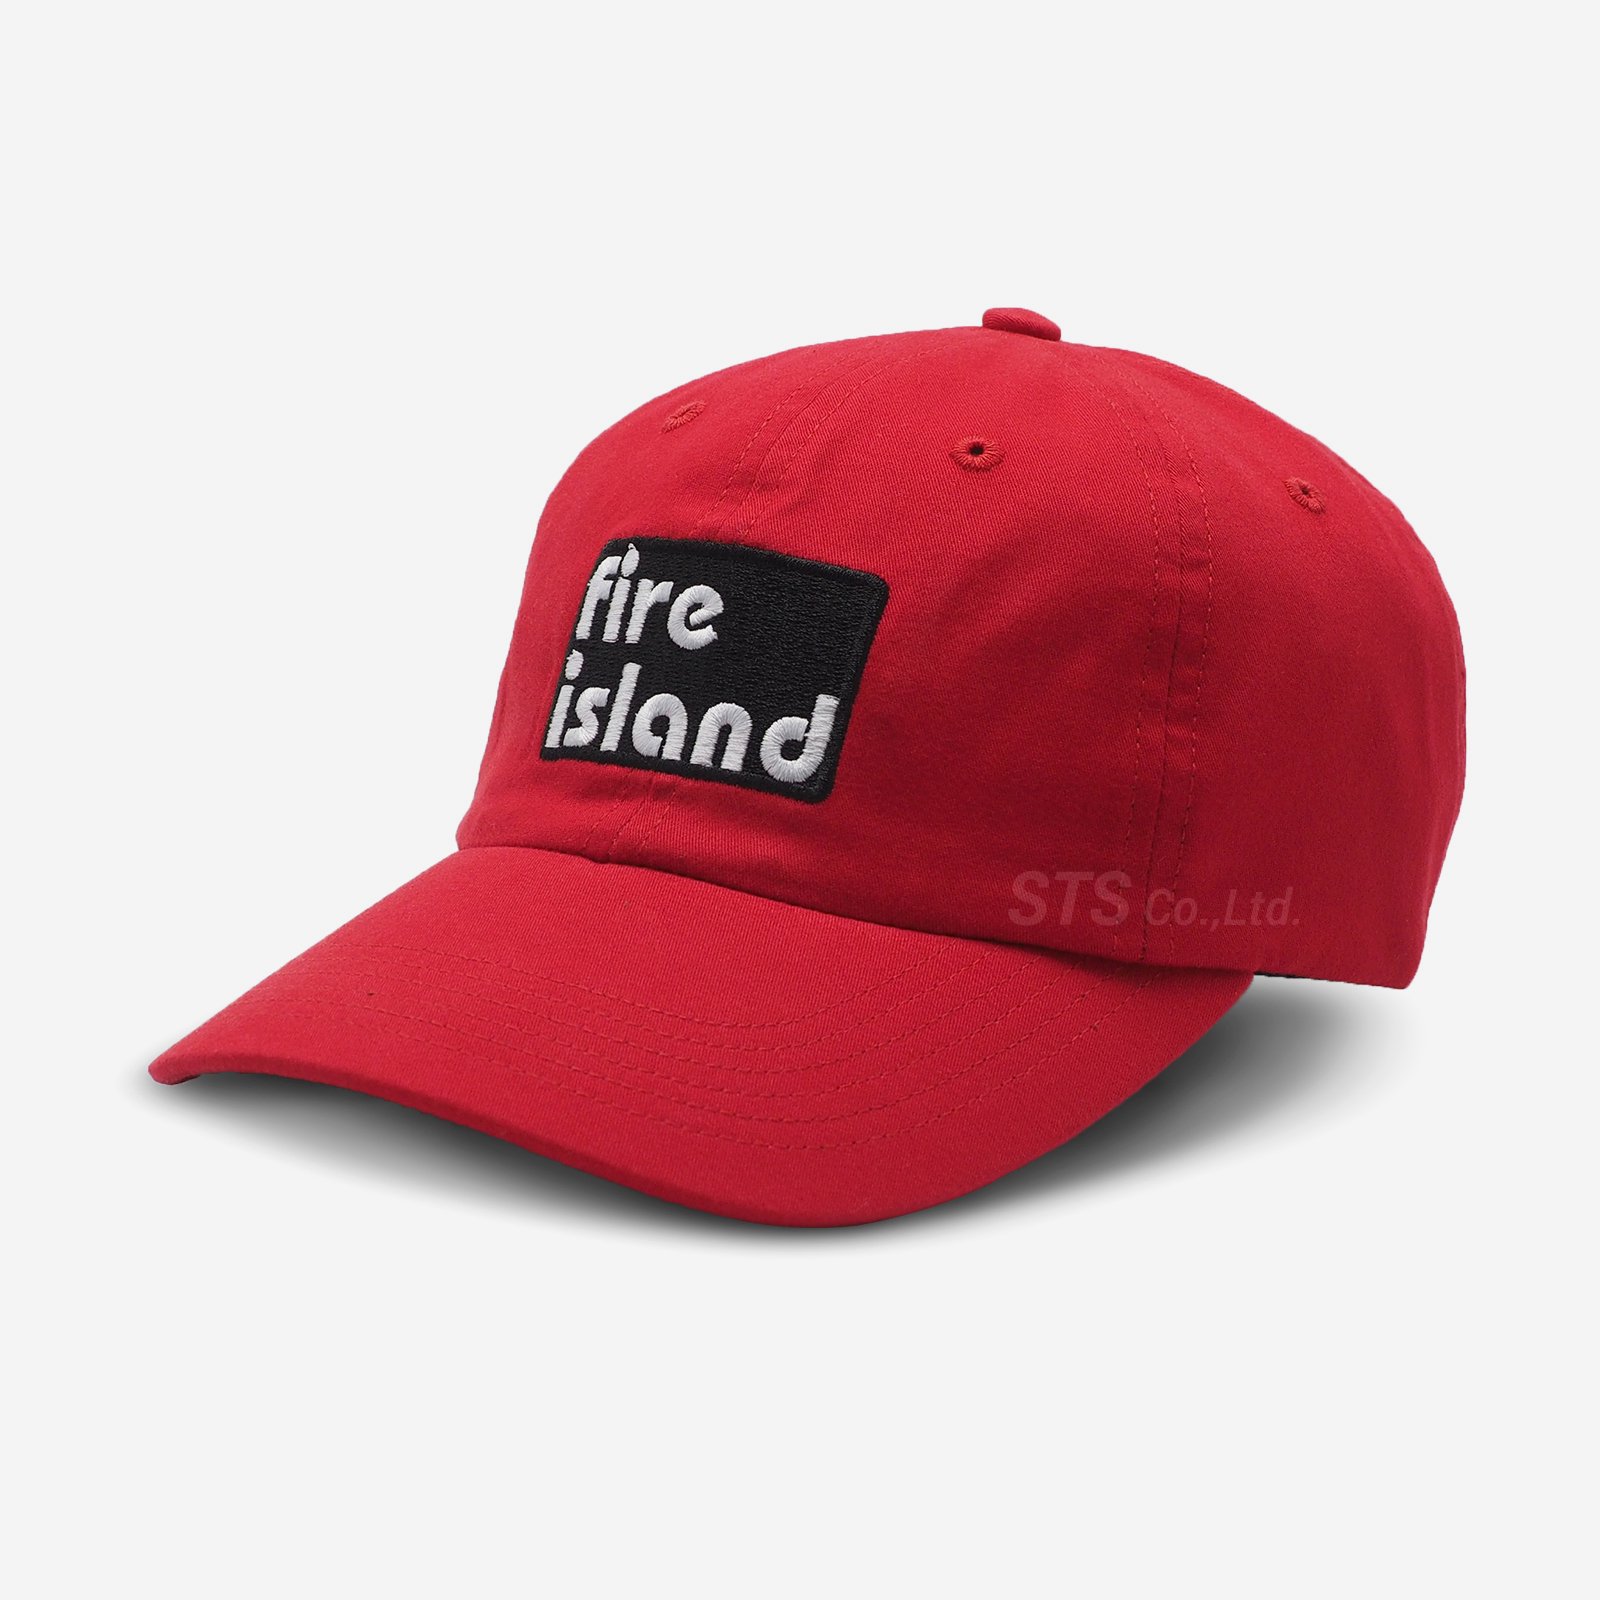 Bianca Chandon - Fire Island Cap - UG.SHAFT